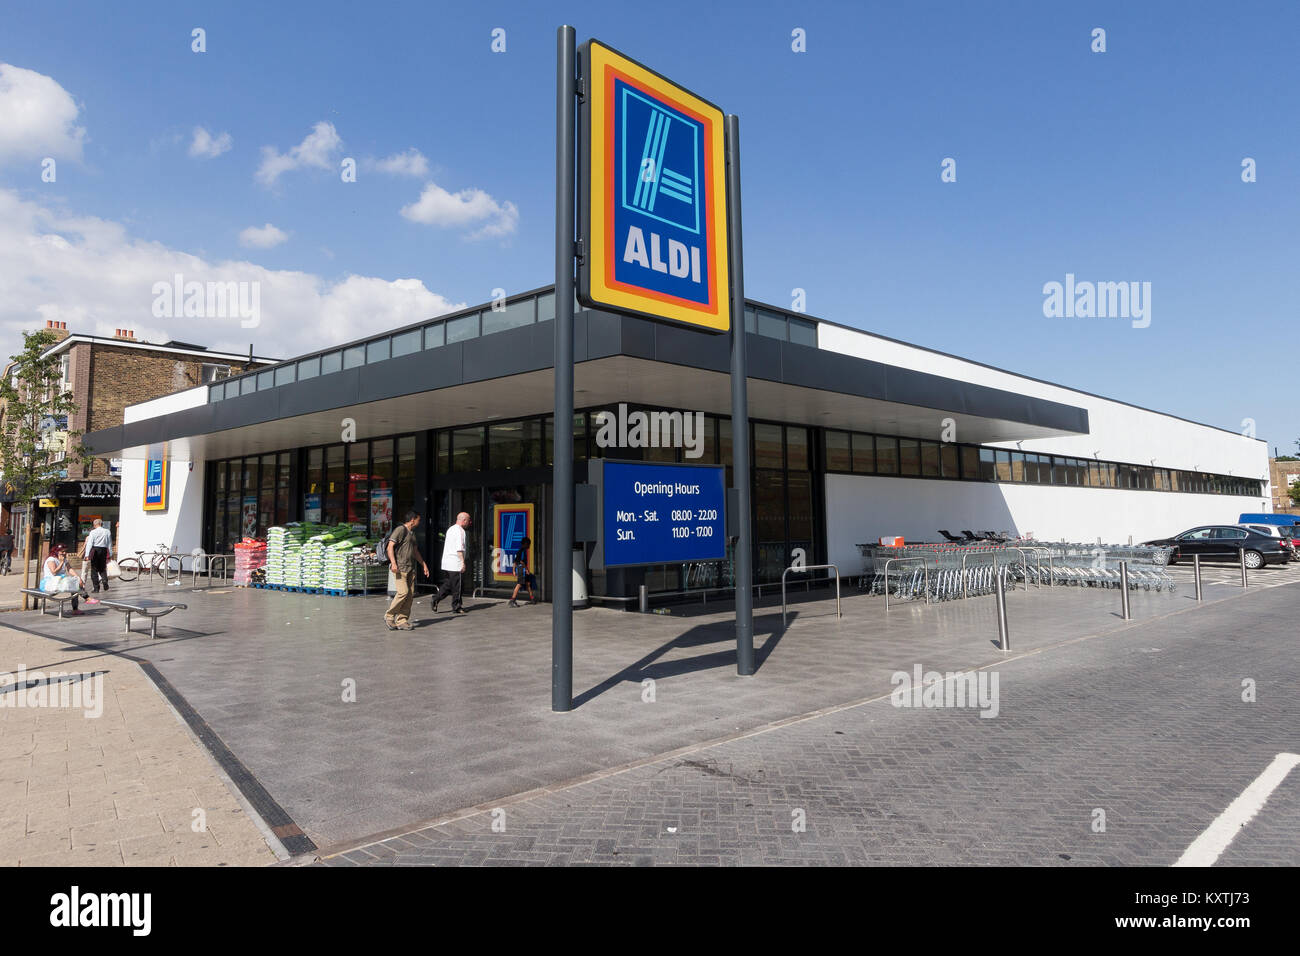 Aldi supermarket, Tottenham, London Stock Photo